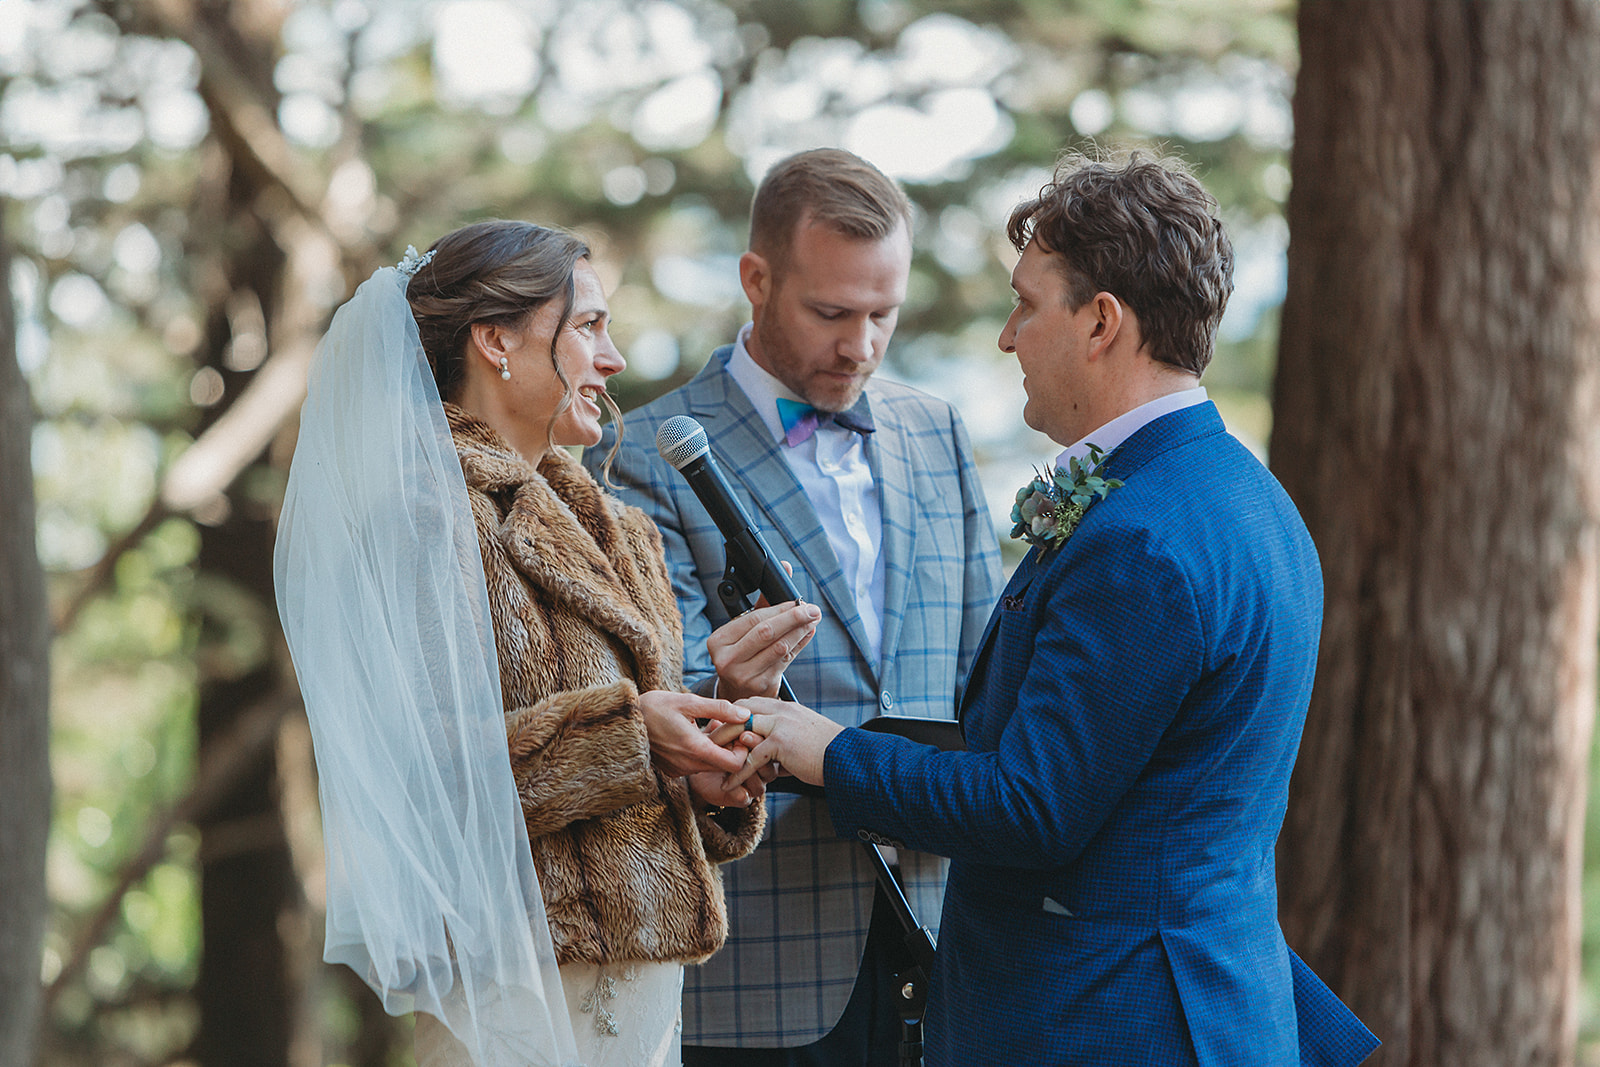 Outdoor wedding ceremony in Marin County, CA